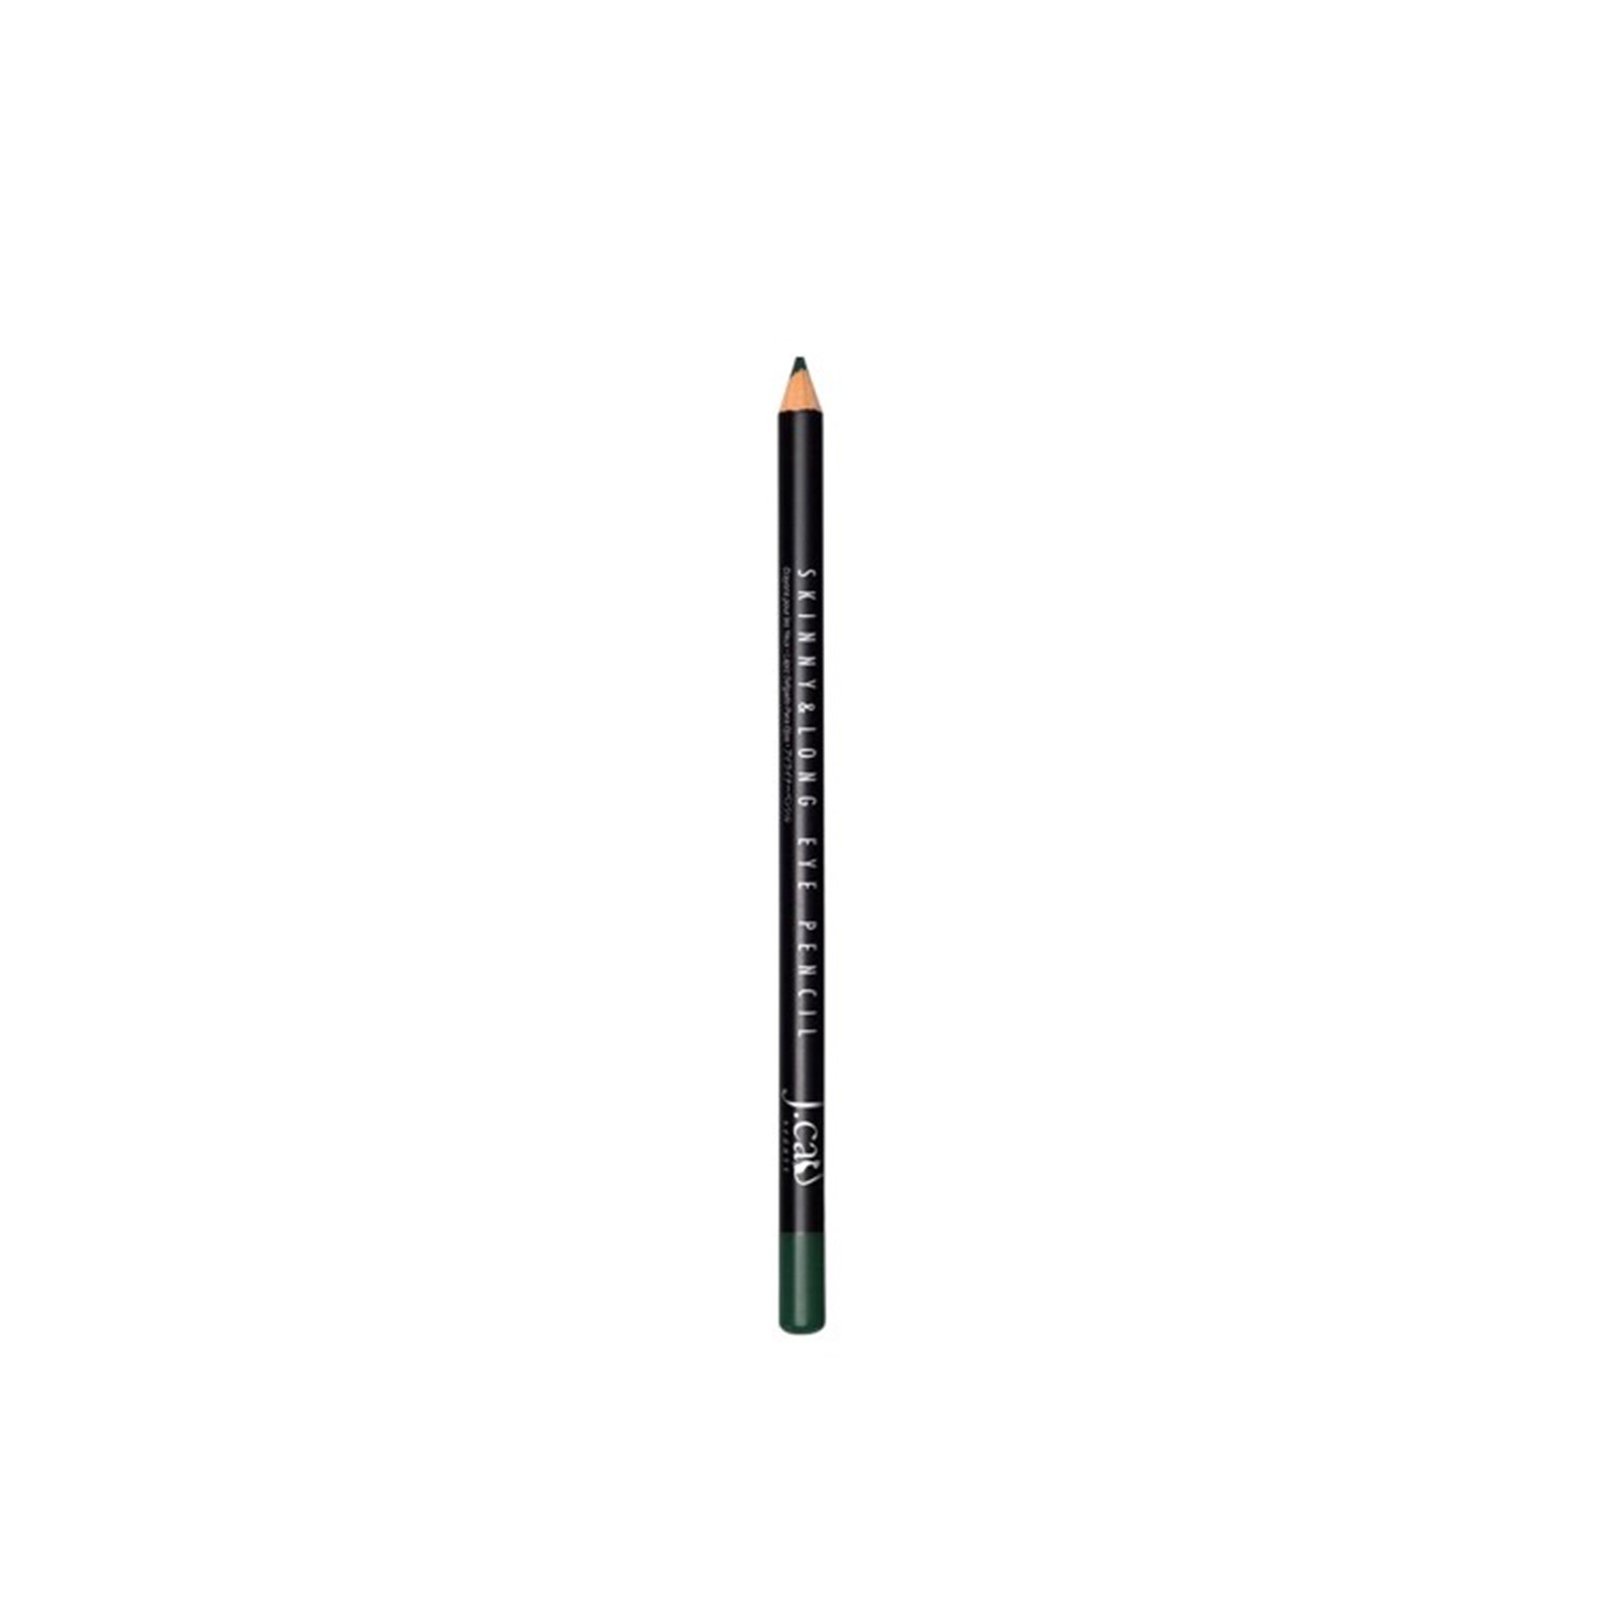 J.Cat Skinny & Long Eye Pencil 108 Hunter Green 2g (0.08 oz)